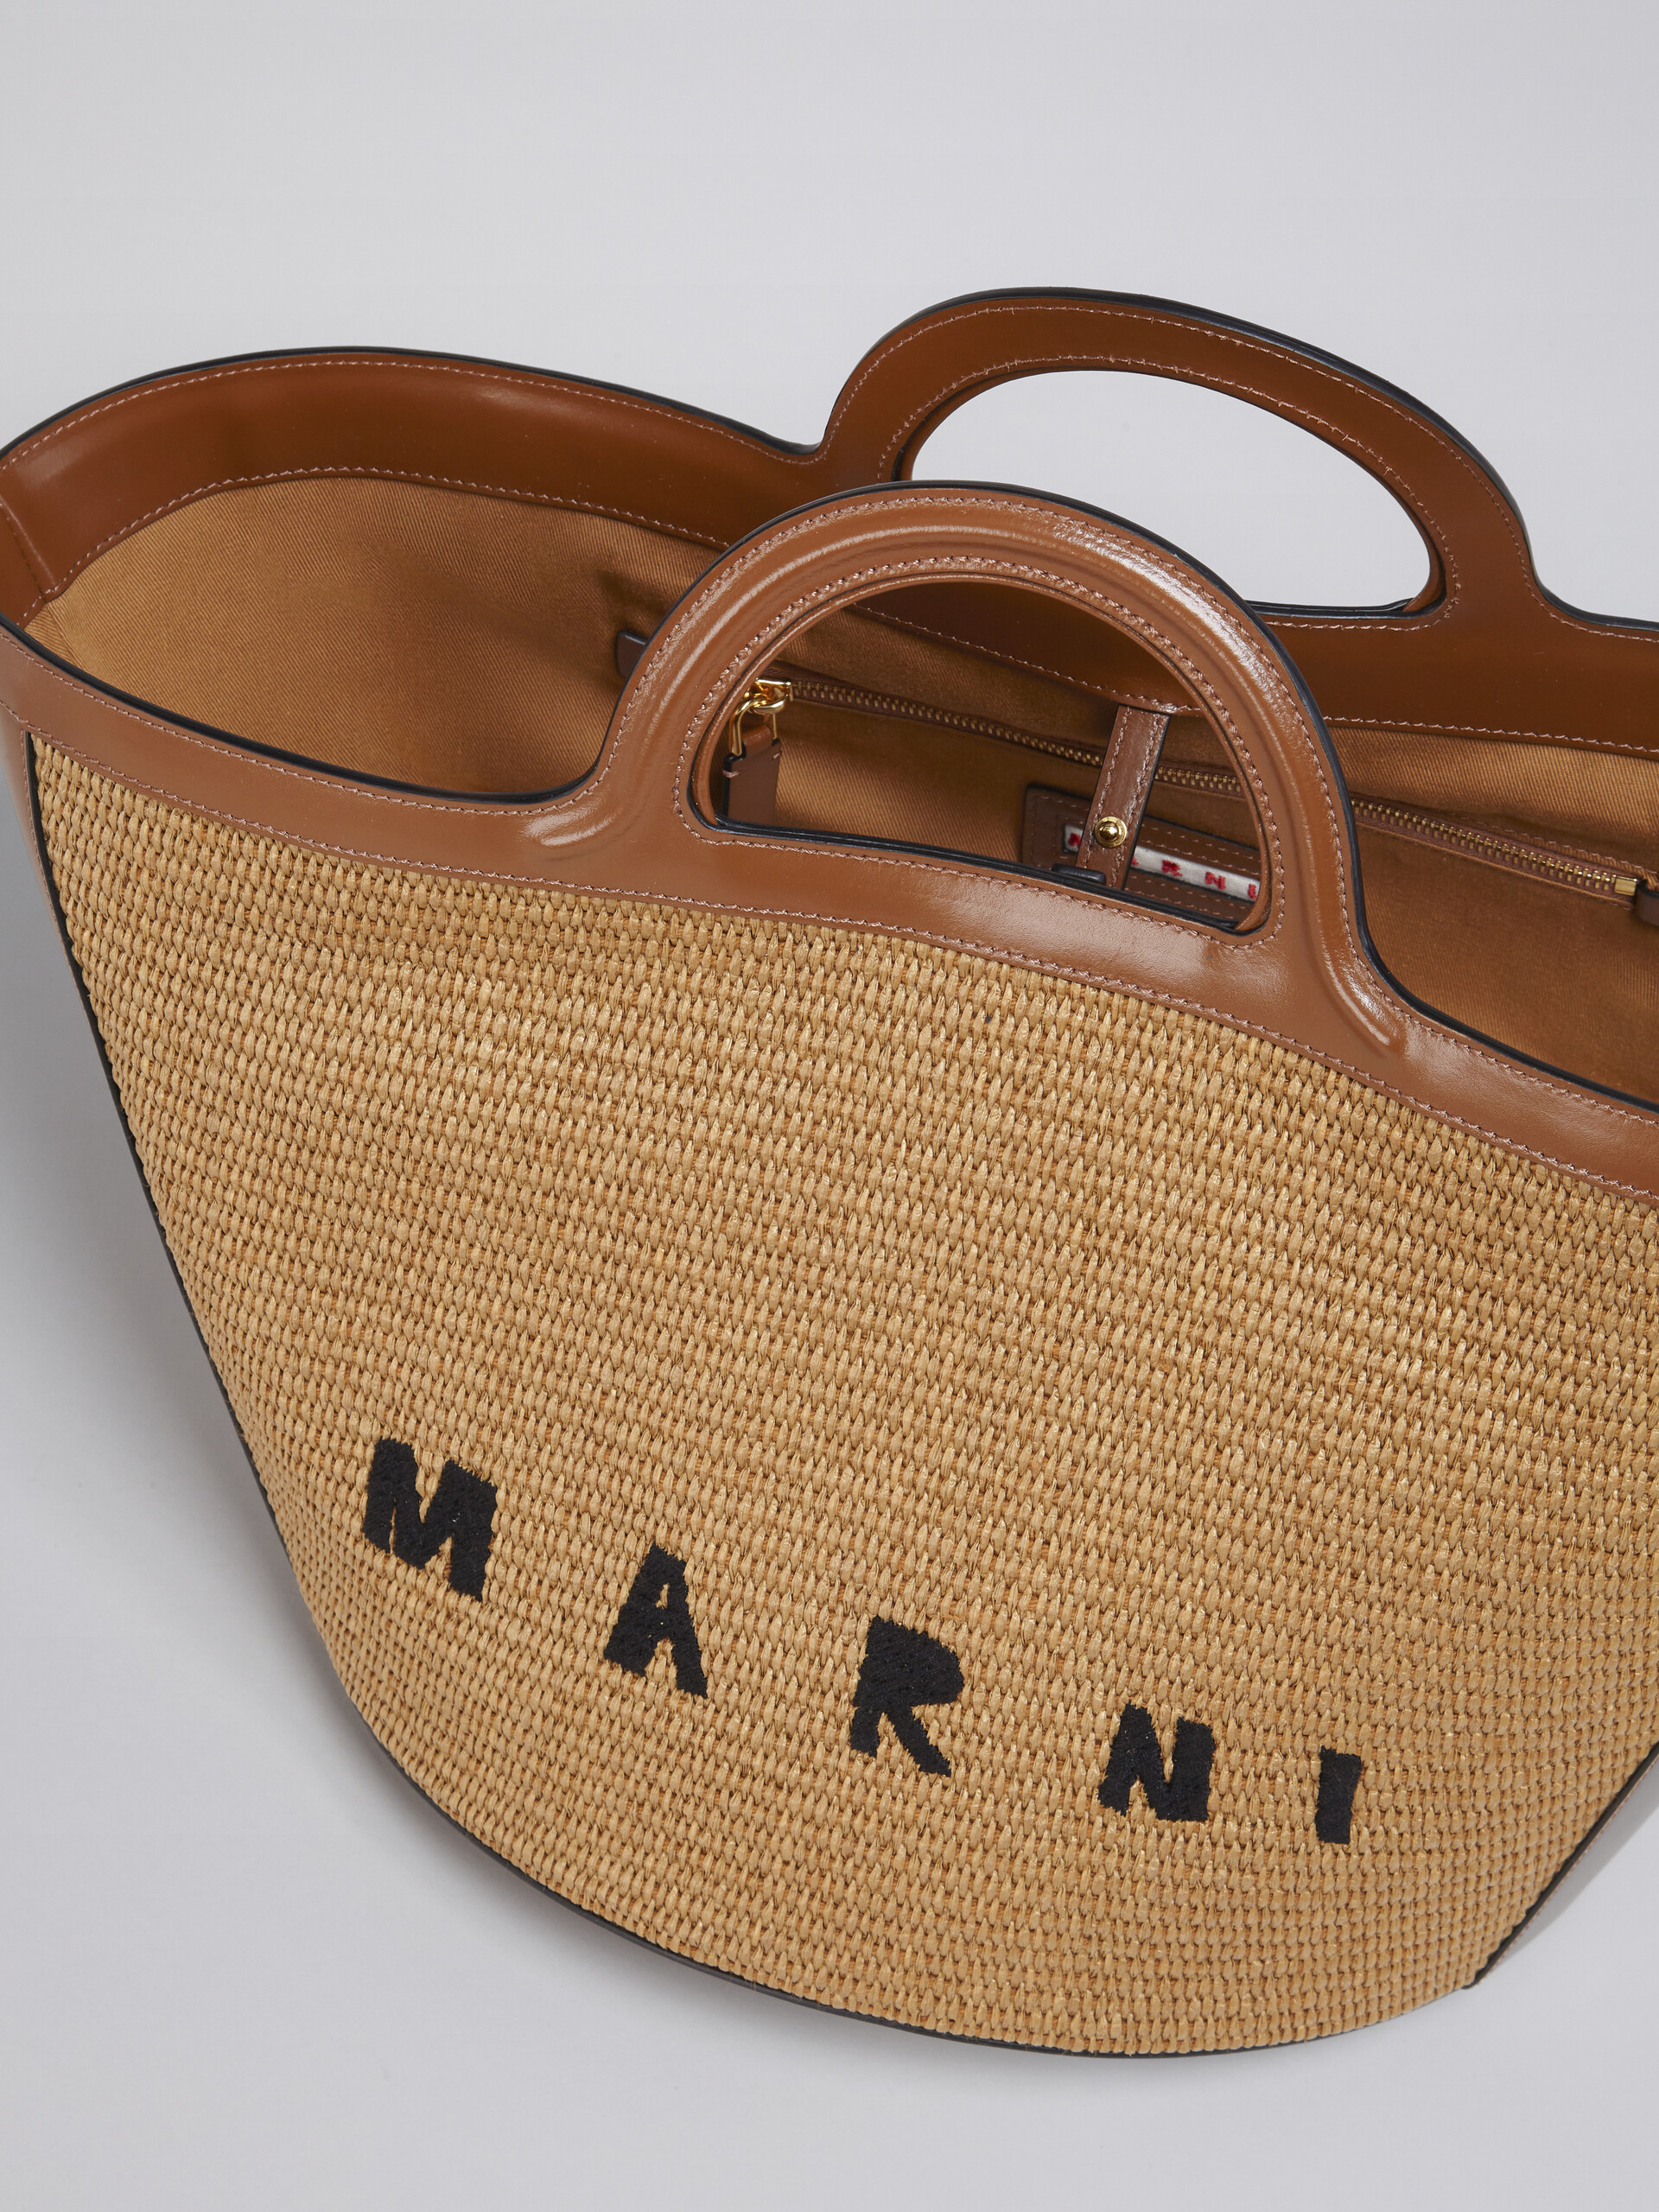 Brown leather and raffia large TROPICALIA SUMMER bag - Handbags - Image 4